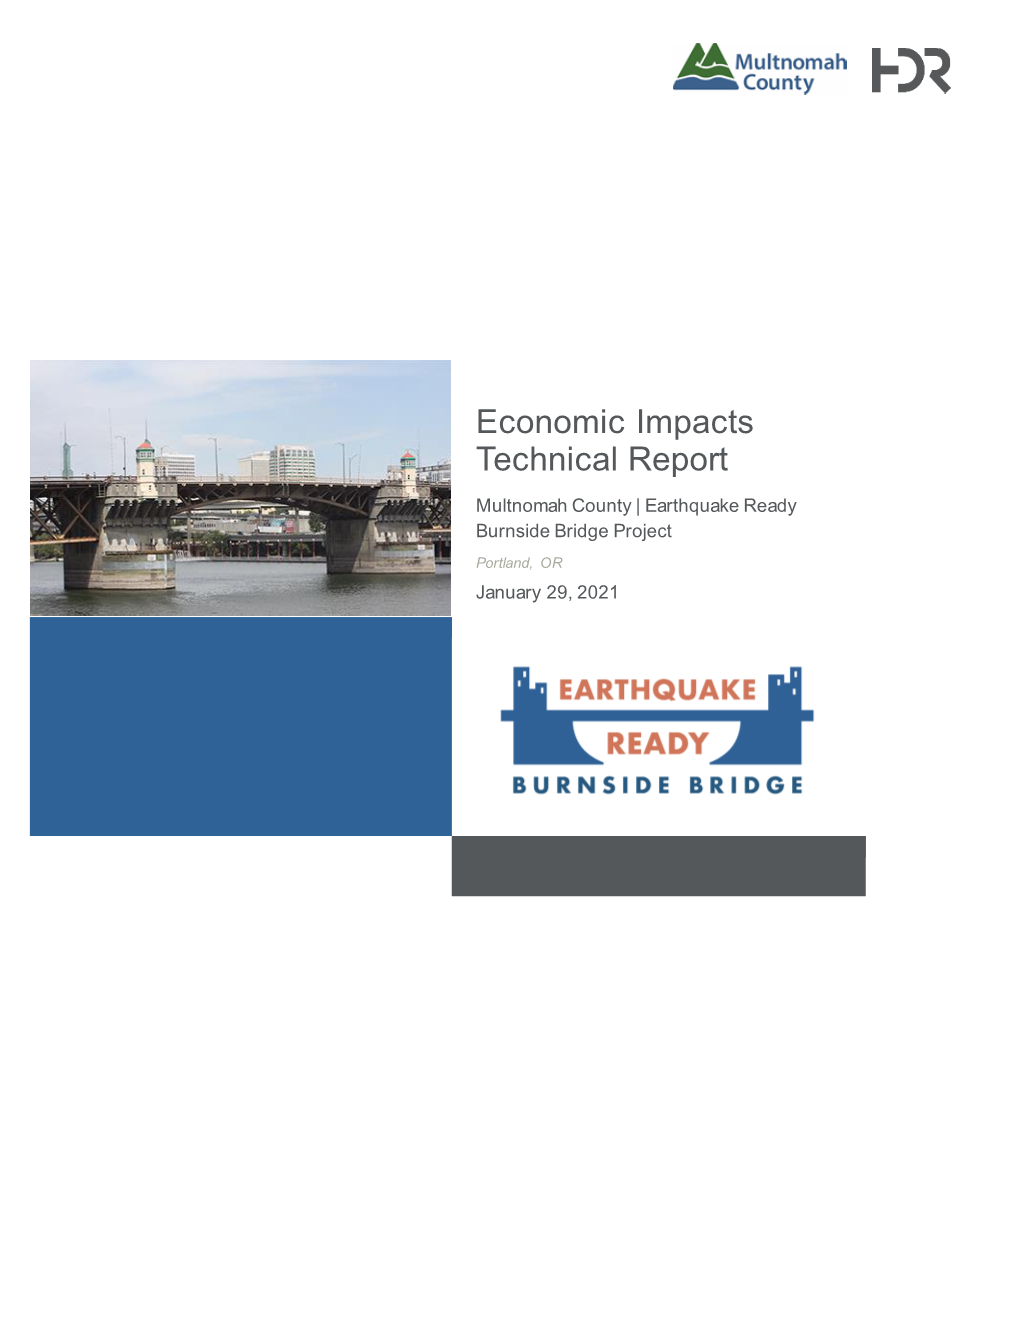 Earthquake Ready Burnside Bridge Economics Technical Report